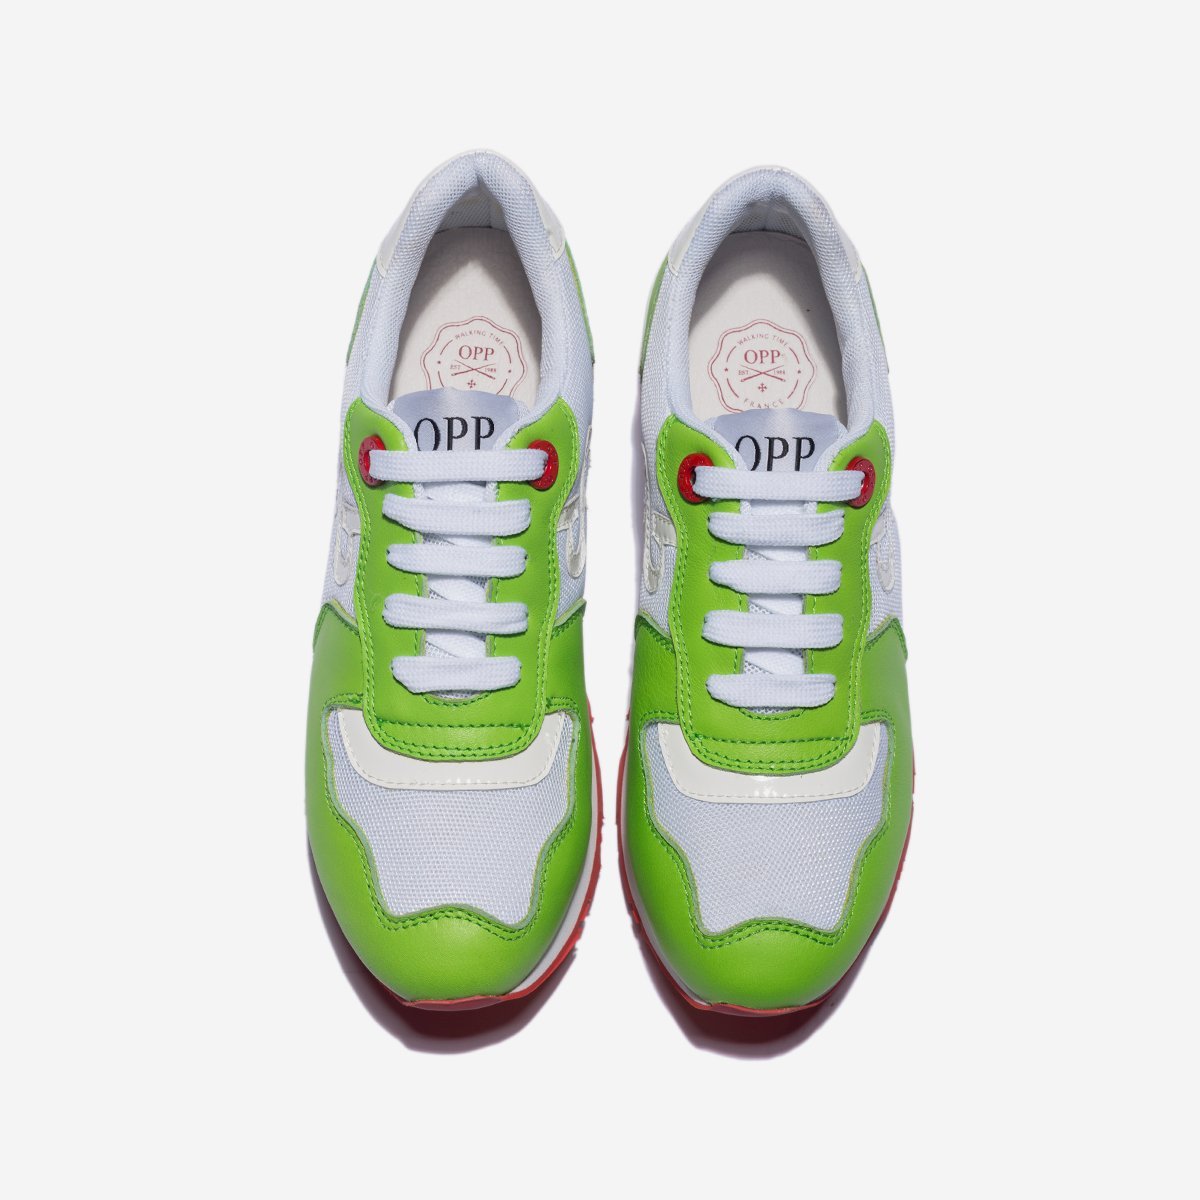 opp tennis shoes